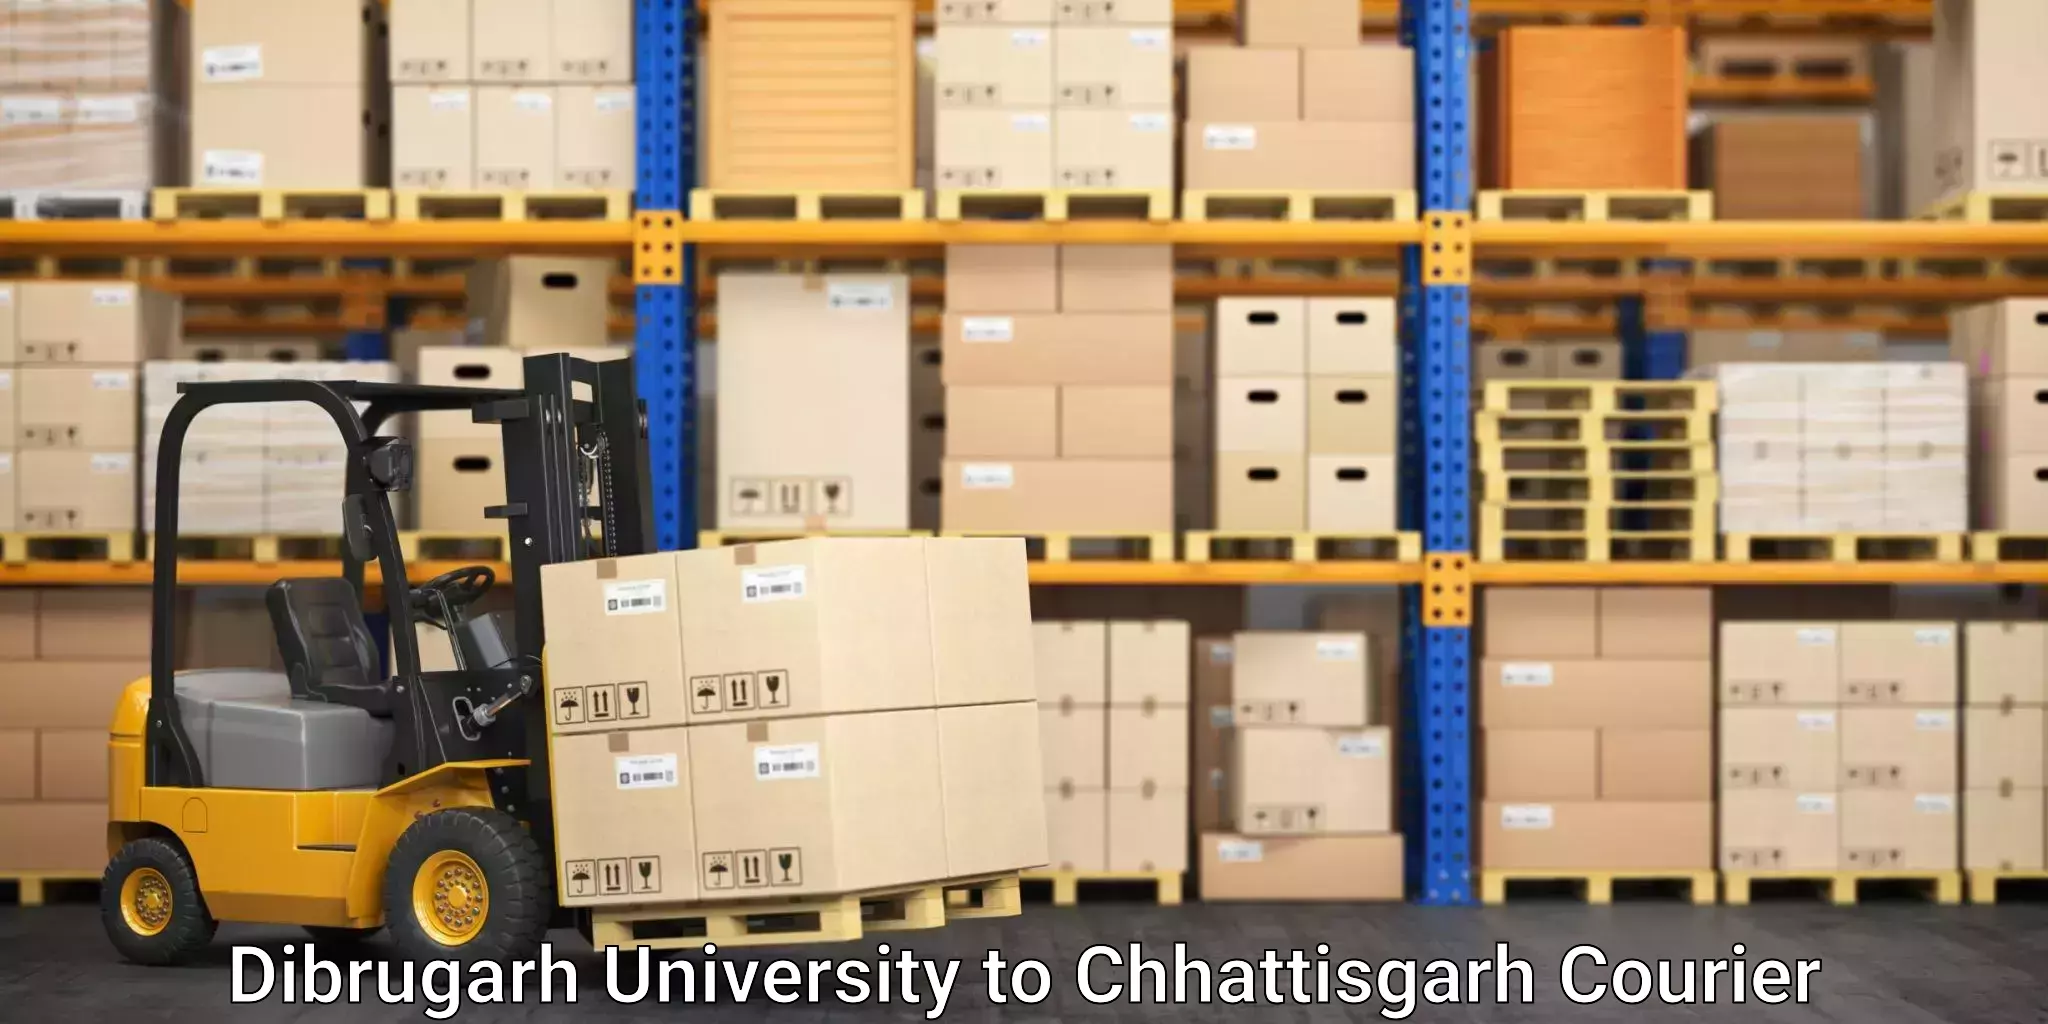 Express logistics providers Dibrugarh University to Narayanpur